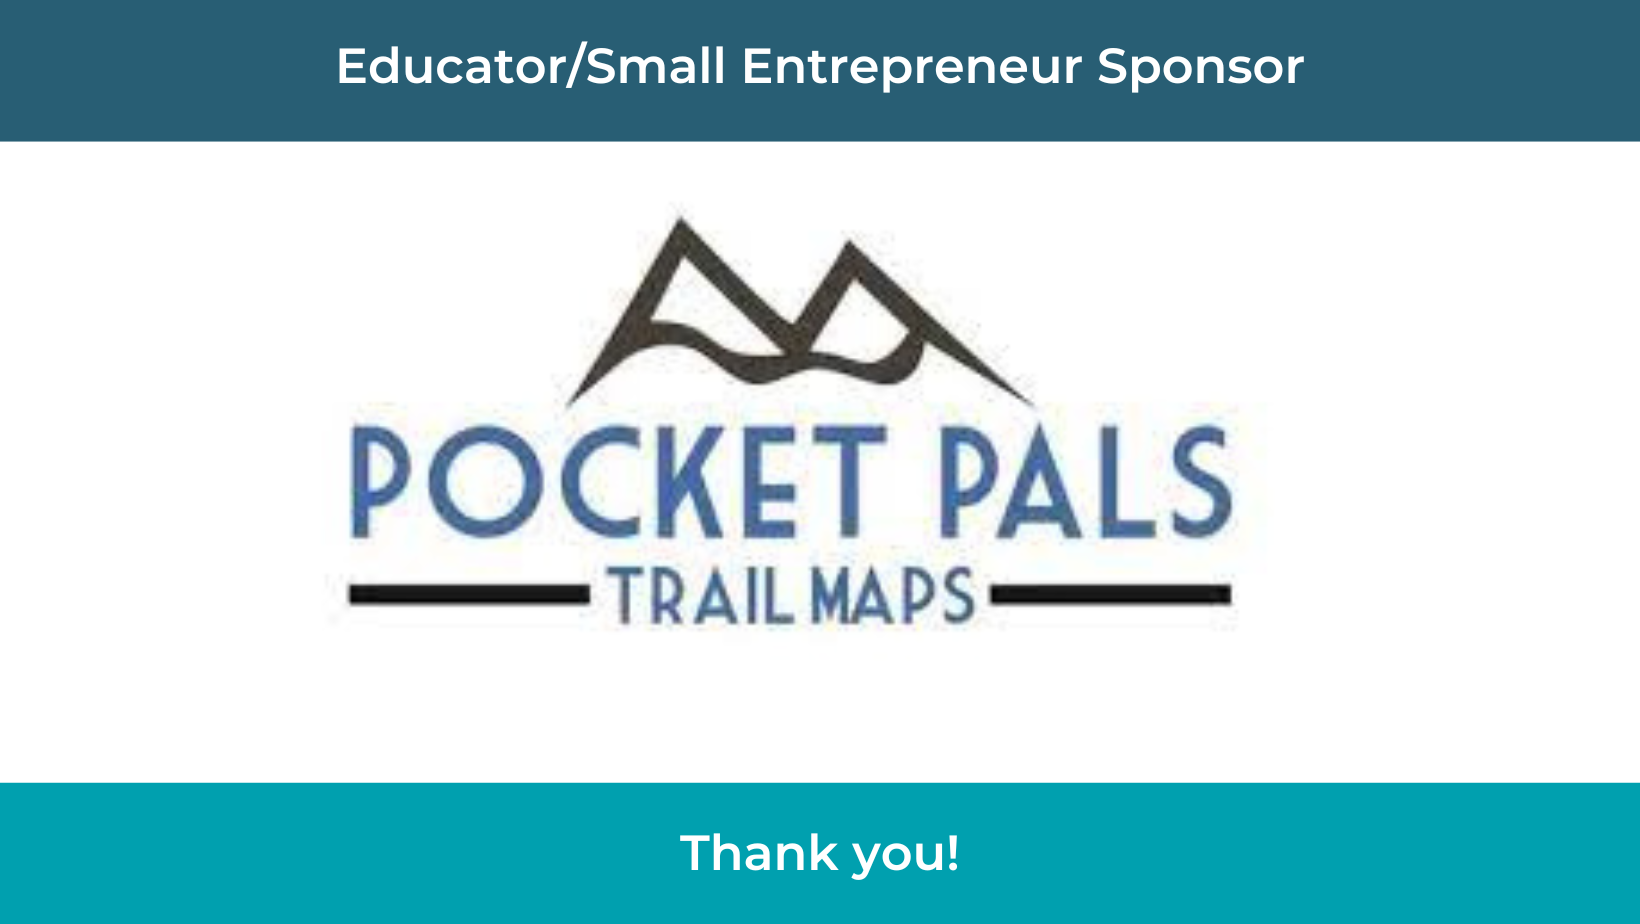 Pocket Pals Trail Maps